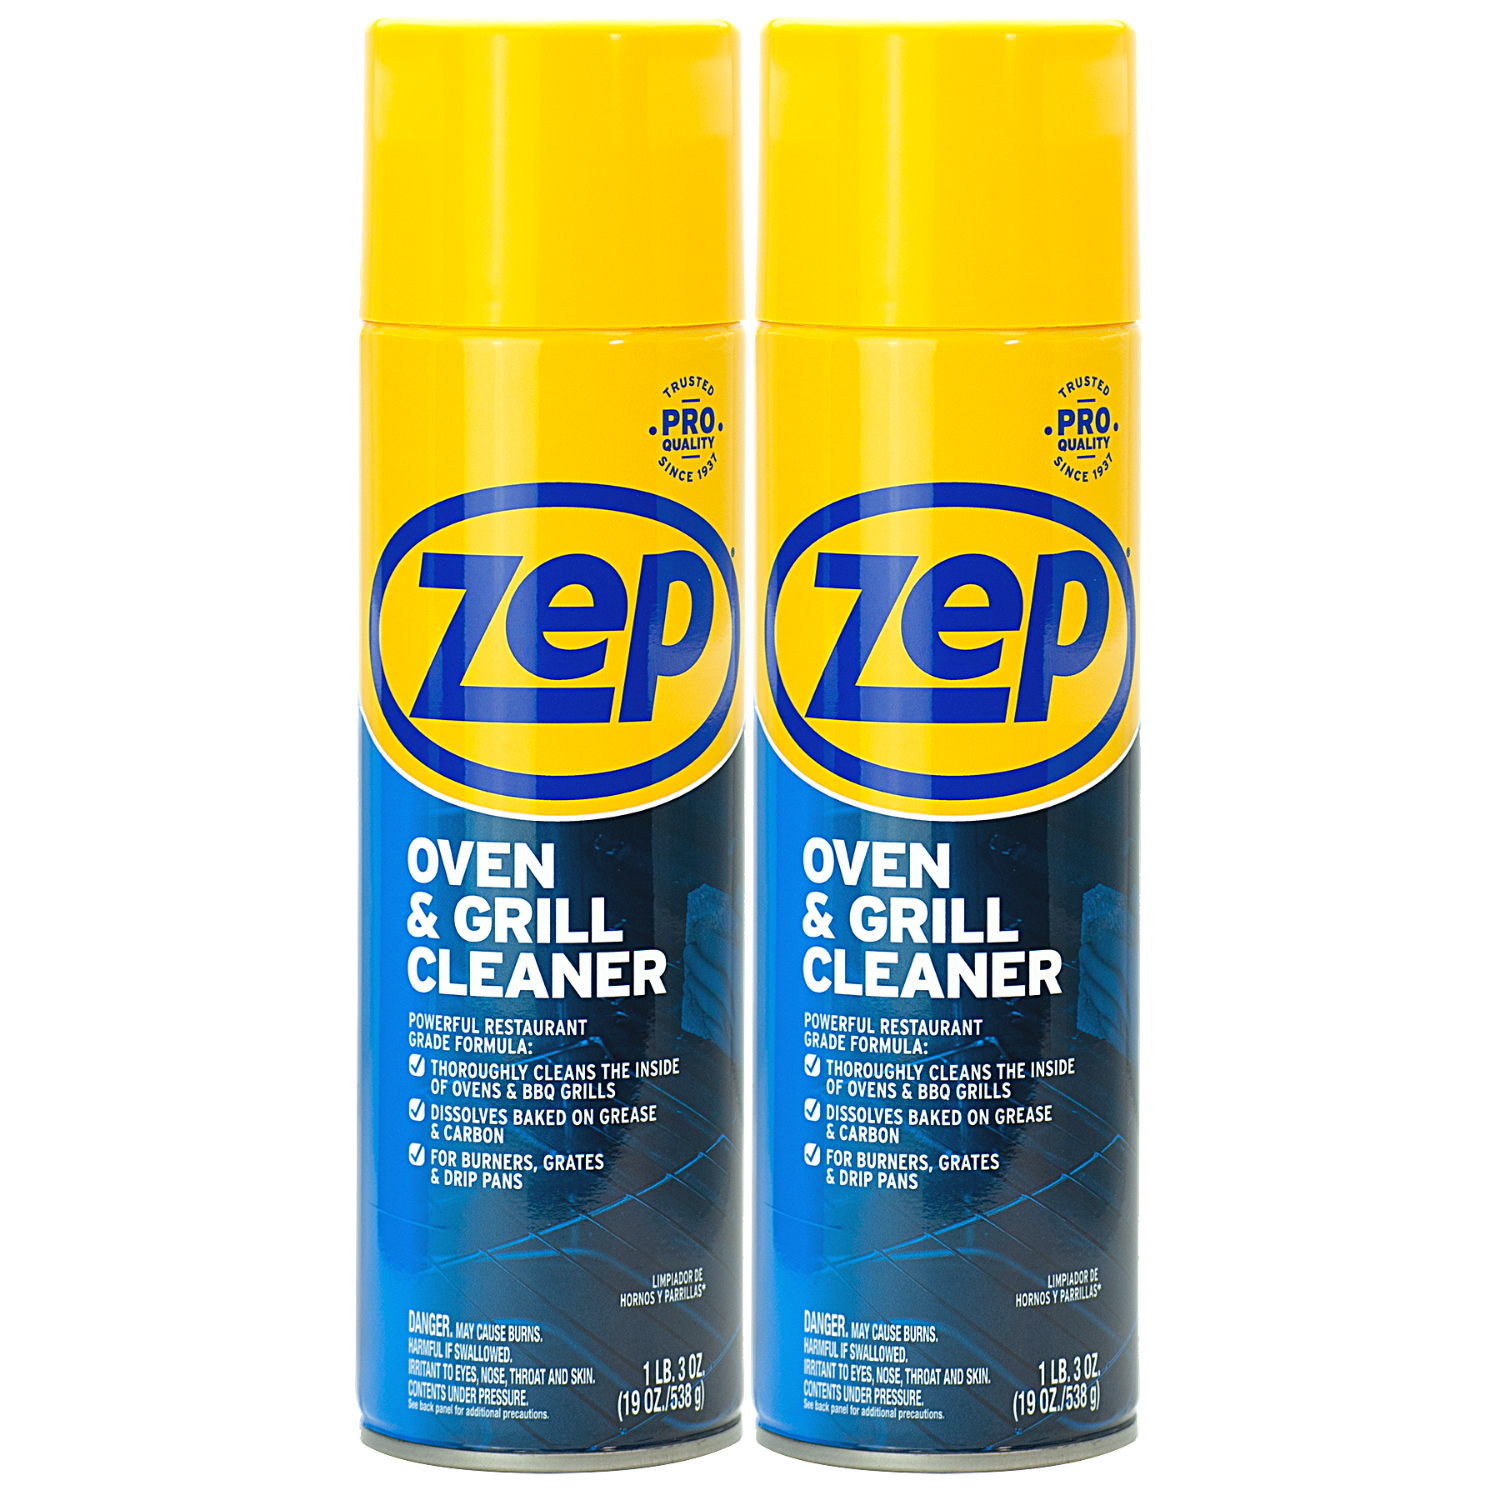 Zep 18 oz. Foaming Wall Cleaner (Case of 12)